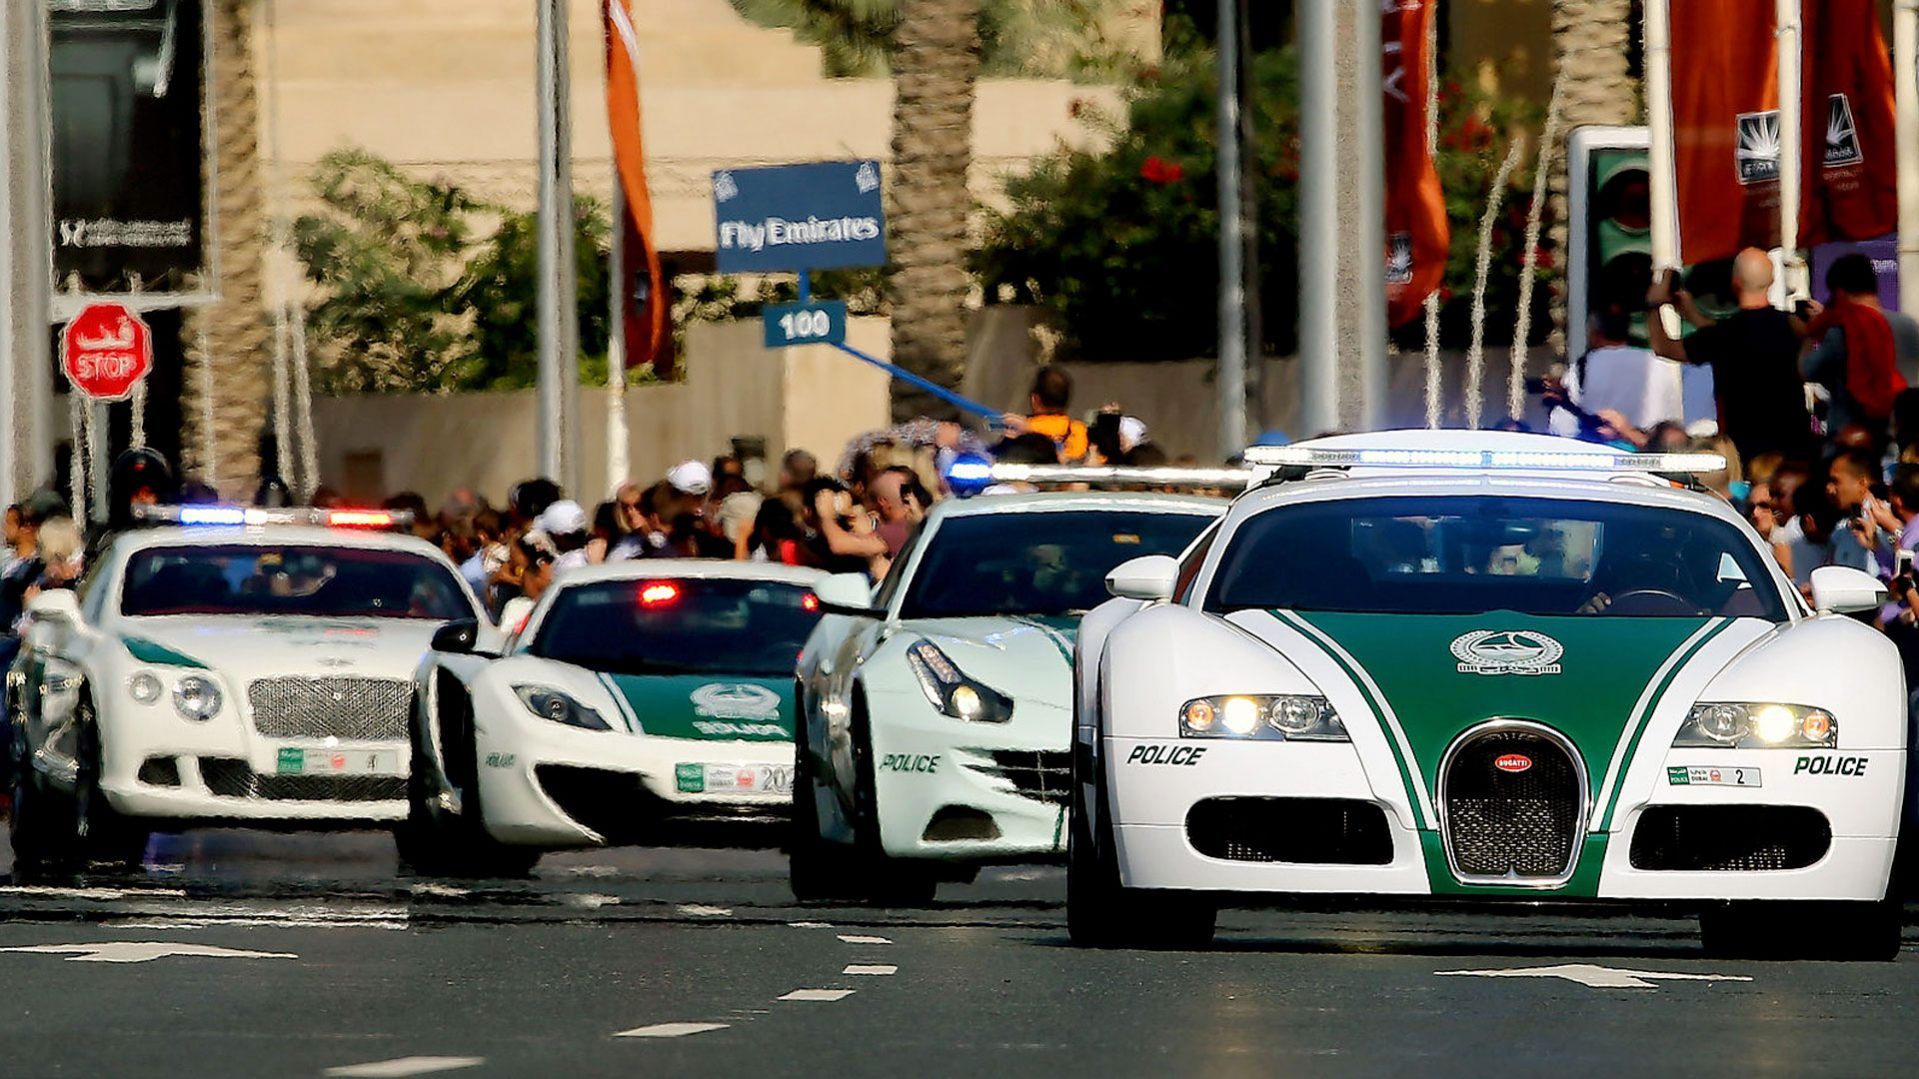 Dubai police's ultra-luxury fleet marching in the streets of Dubai